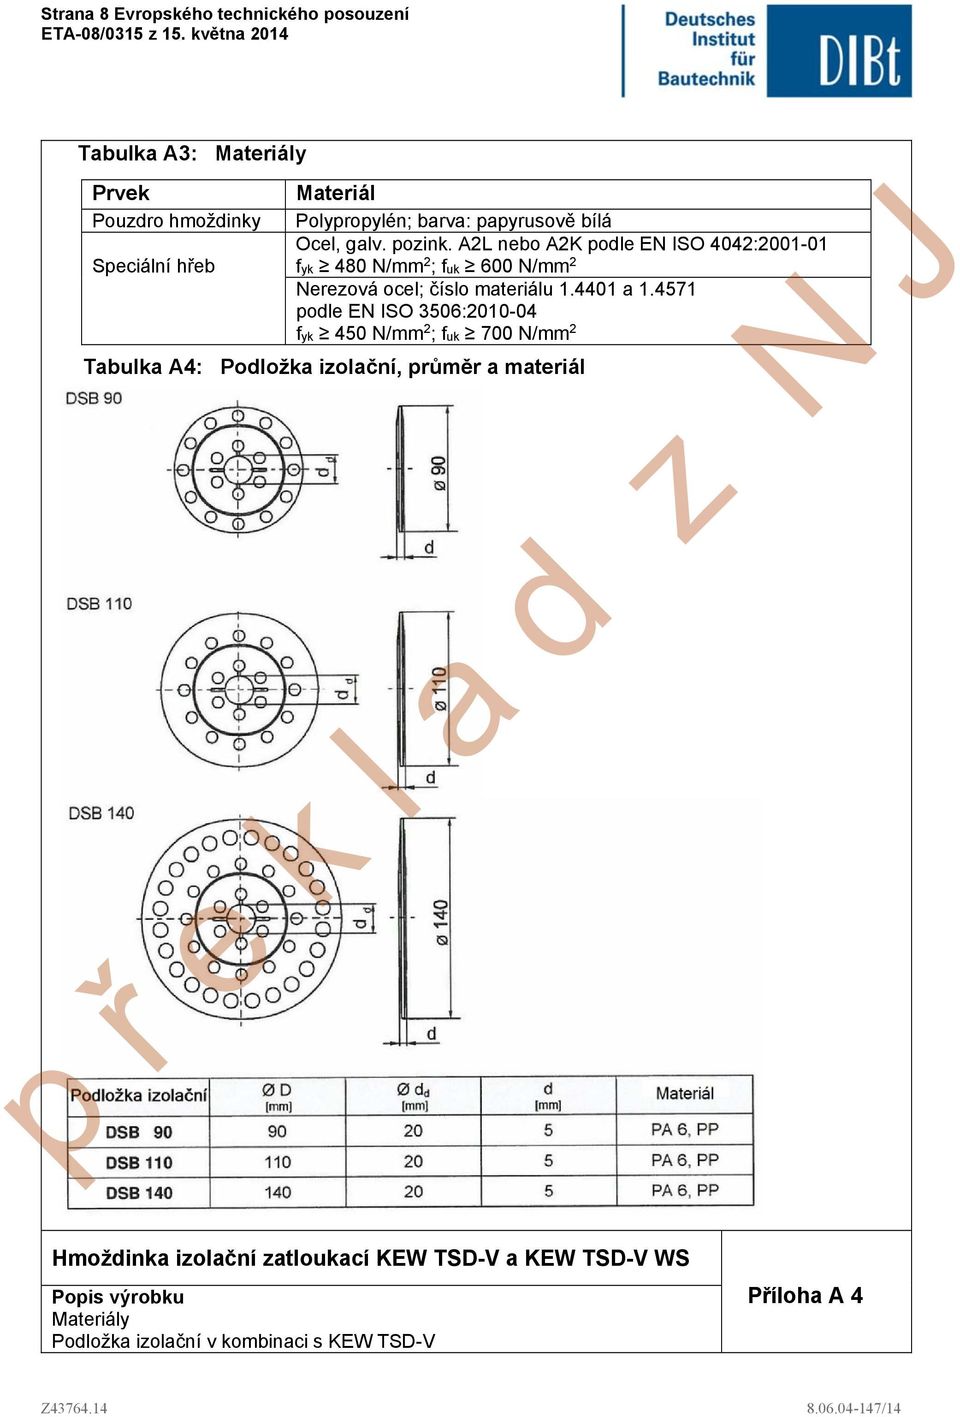 A2L nebo A2K podle EN ISO 4042:2001-01 fyk 480 N/mm 2 ; fuk 600 N/mm 2 Nerezová ocel; číslo materiálu 1.4401 a 1.